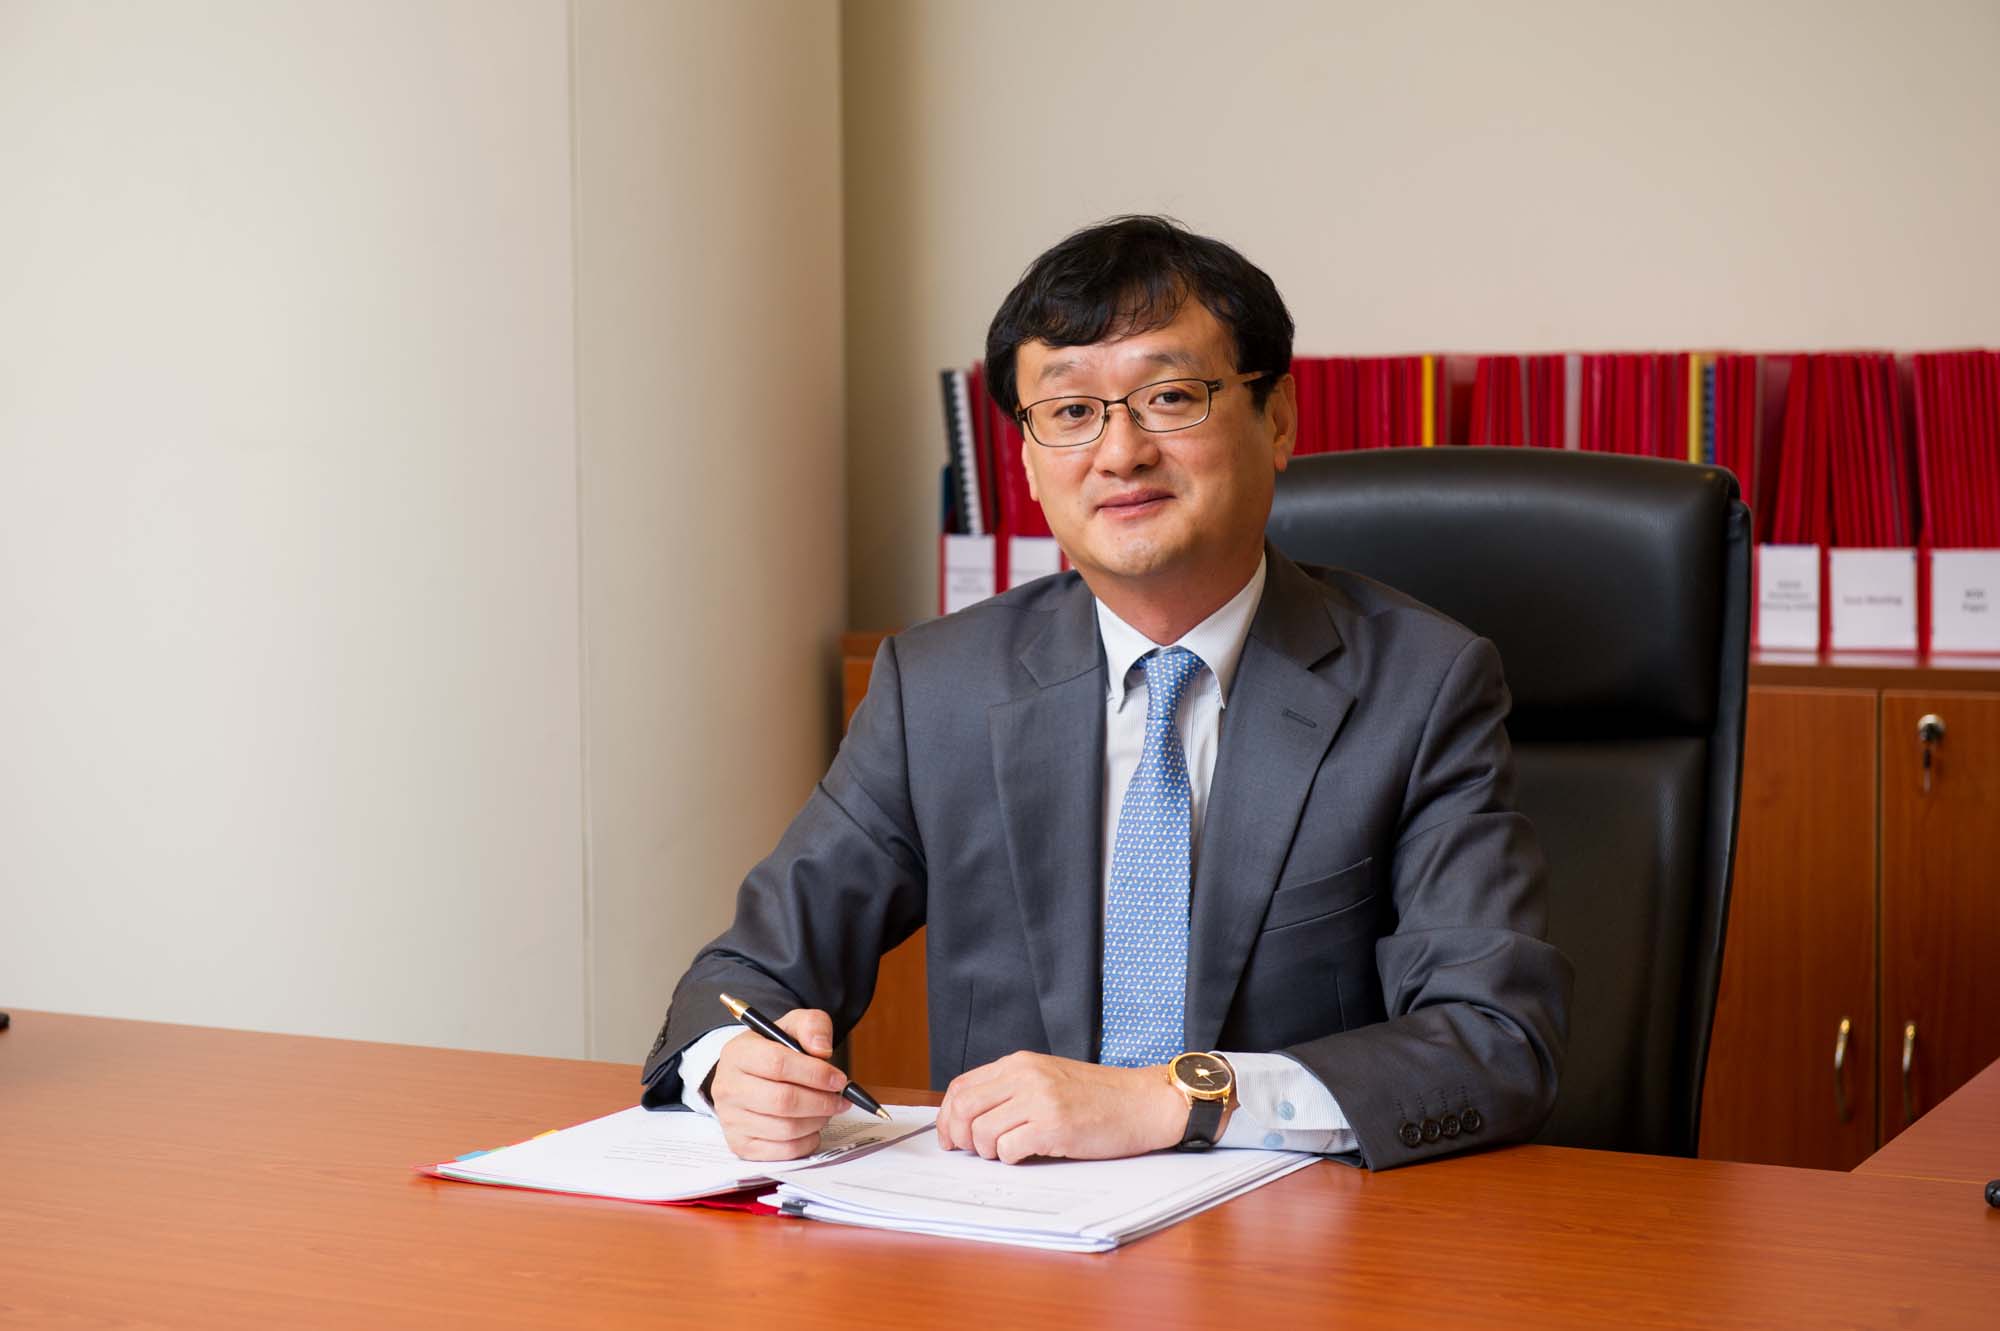 Chief Executive Officer of Mitsubishi Motors Malaysia, Mr. Won-Chul YANG